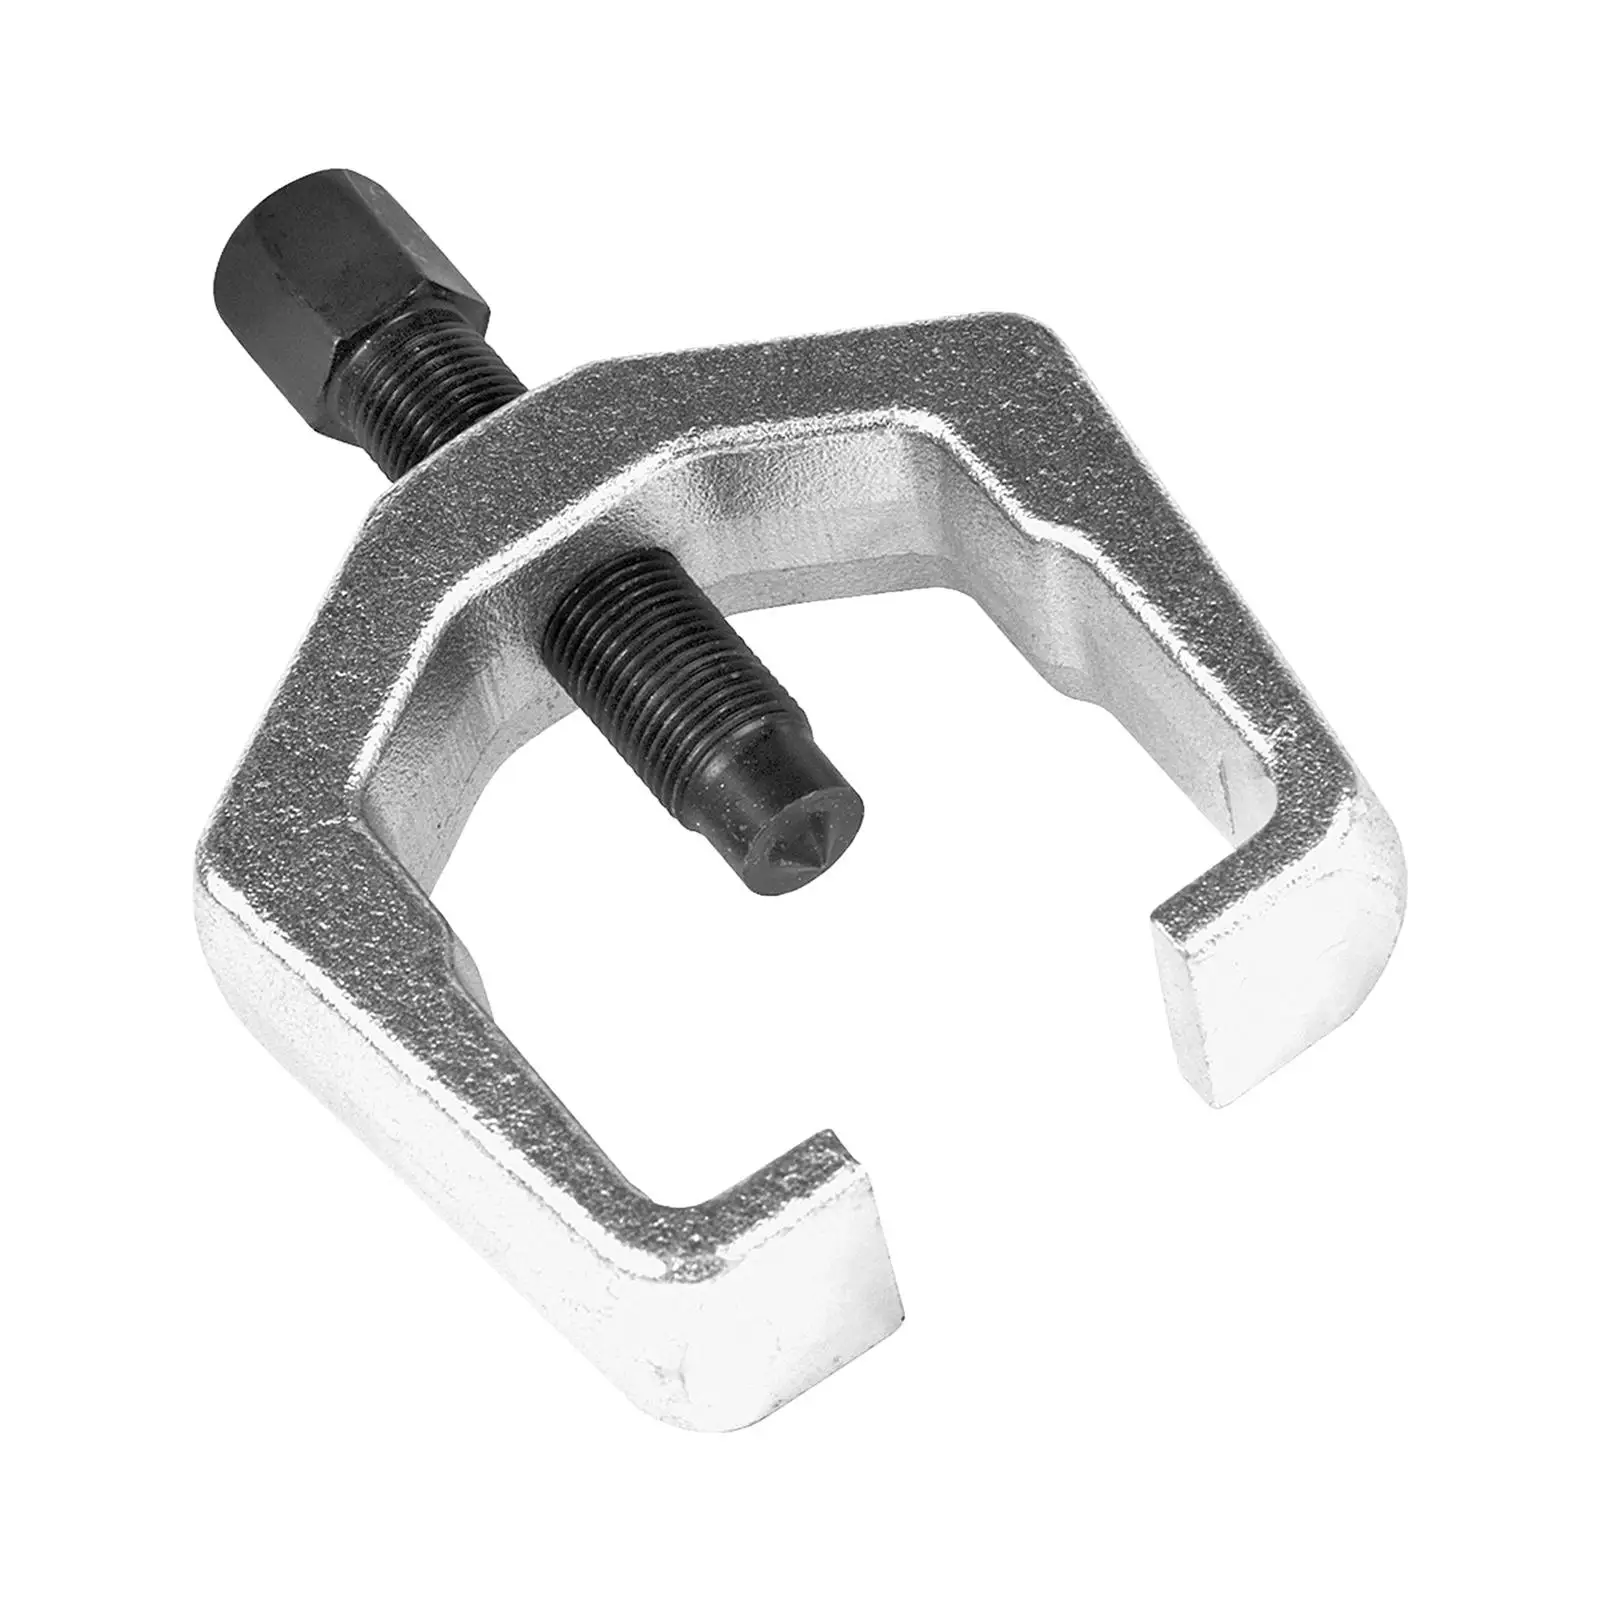 Slack Adjuster Puller High Performance Works on Automatic Adjusters 2 Jaw Gear